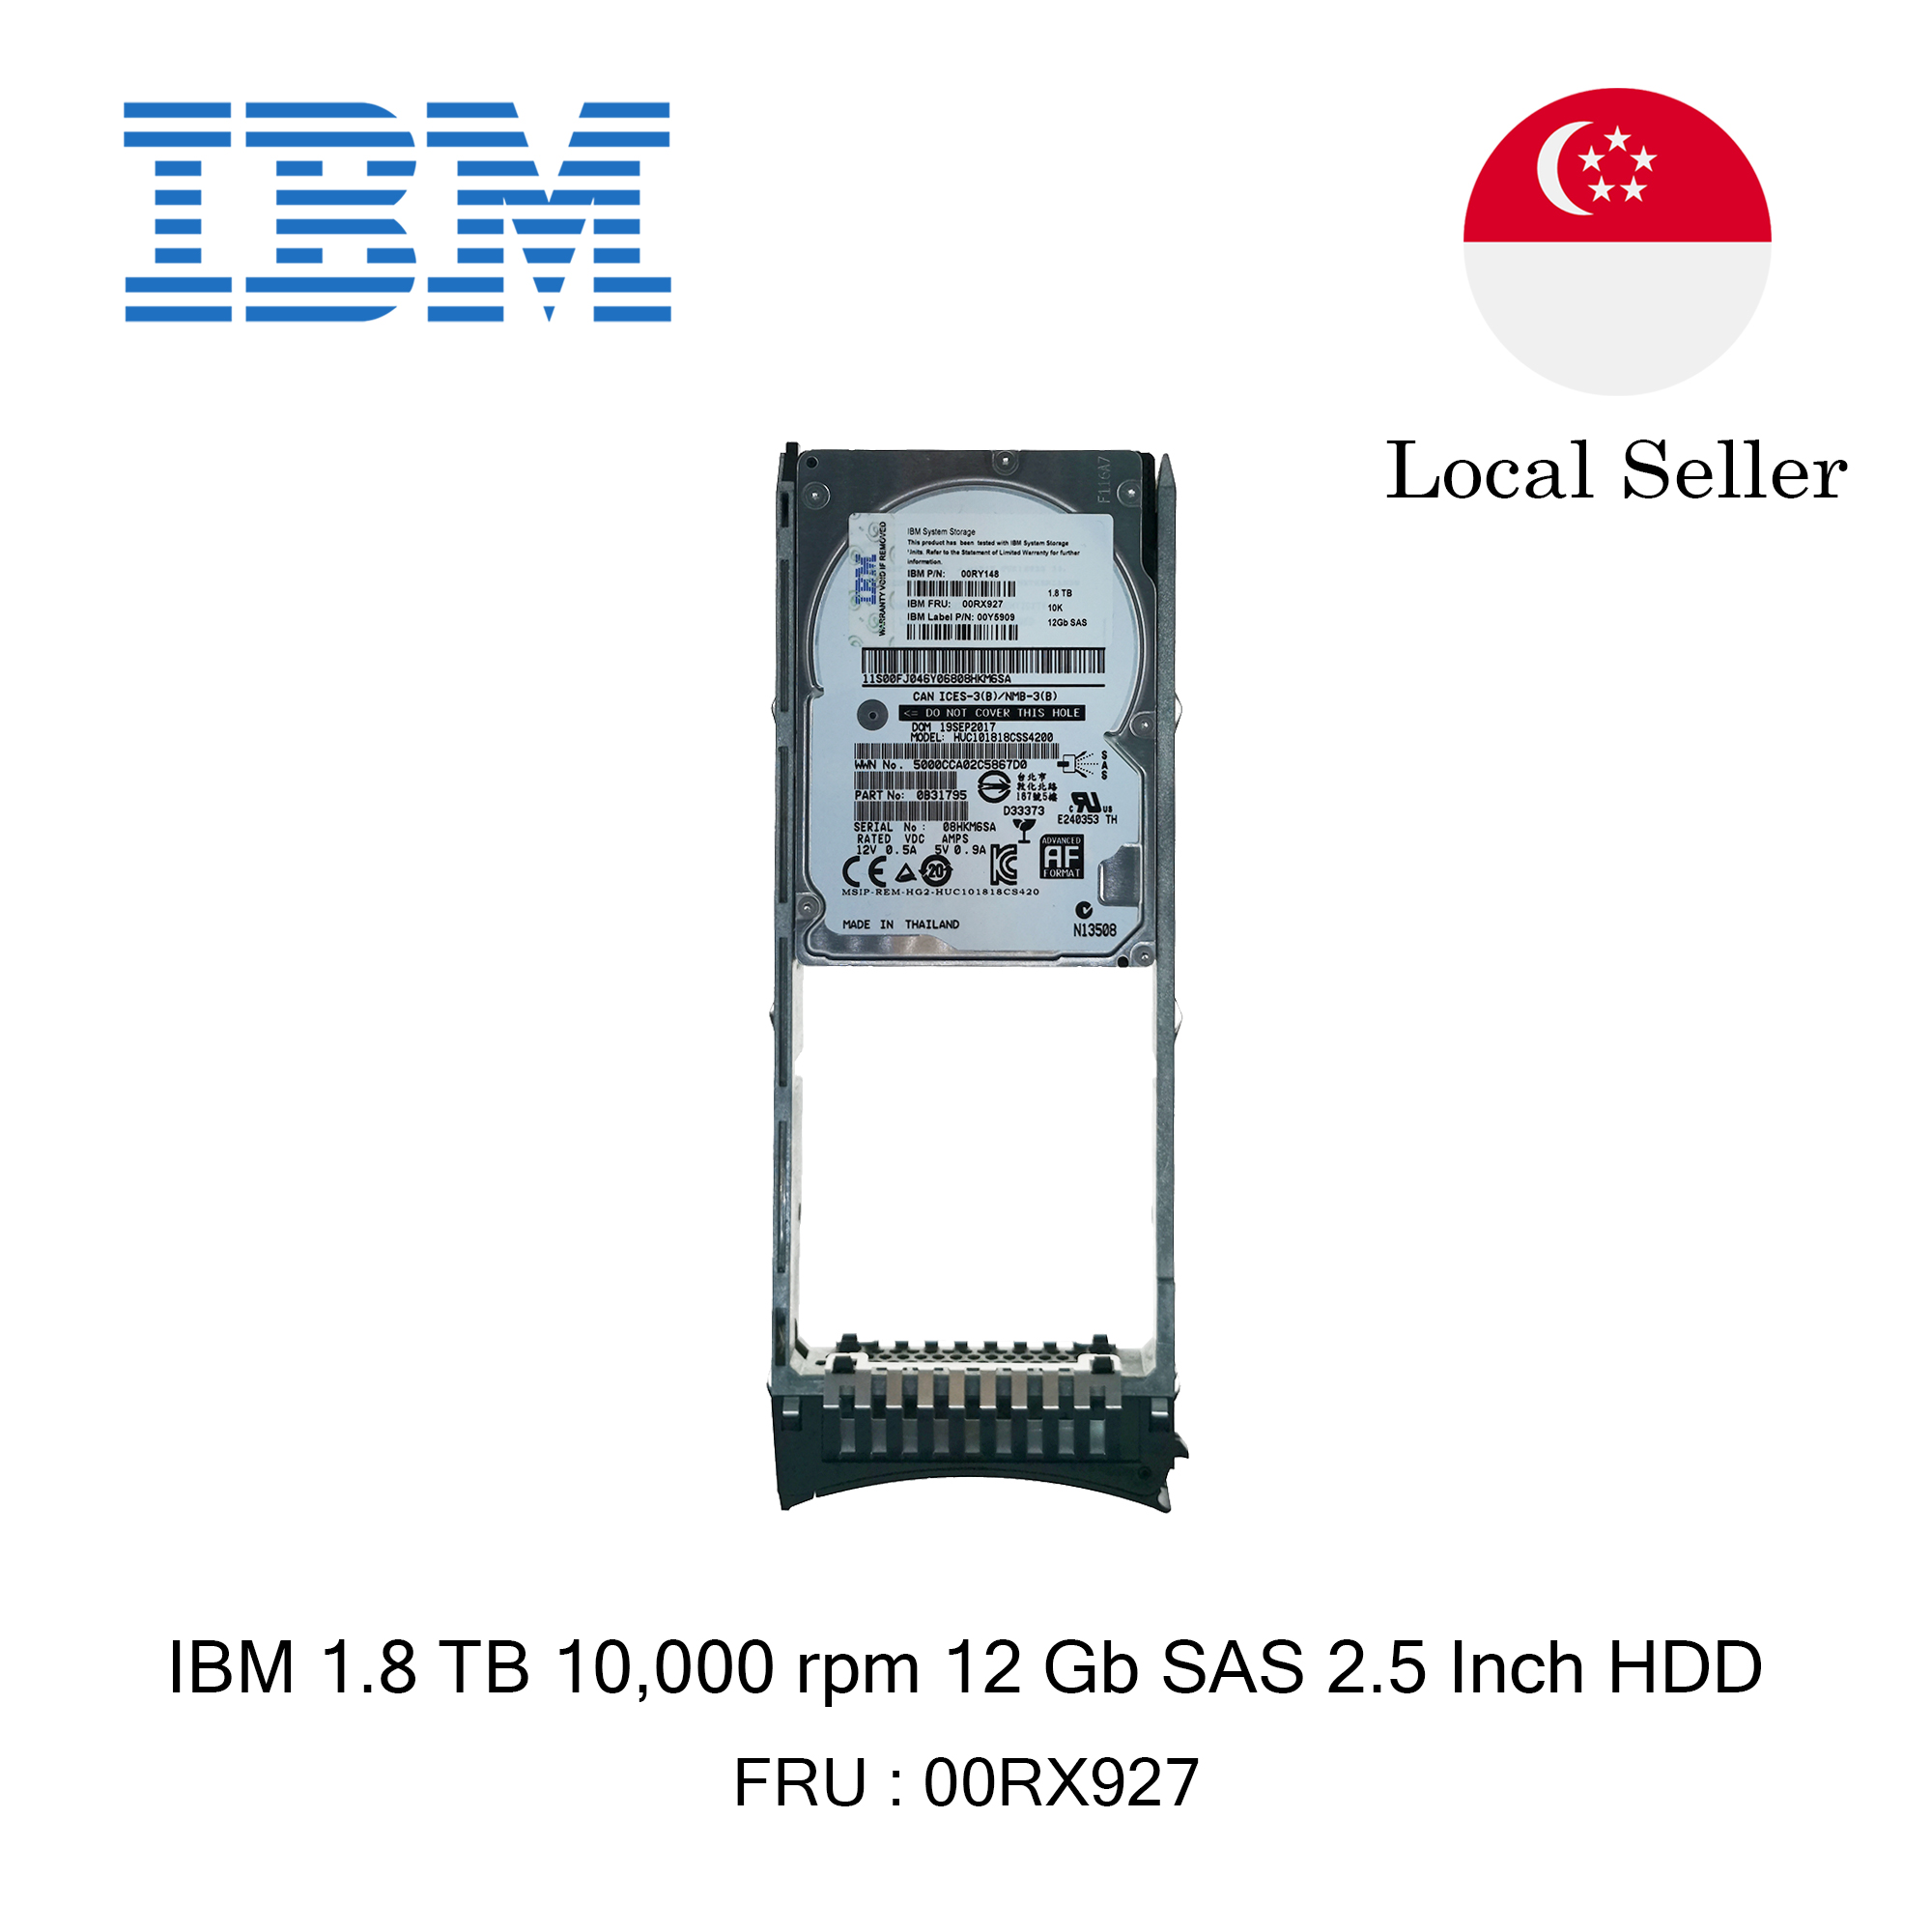 Buy IBM Internal Hard Drives Online | lazada.sg